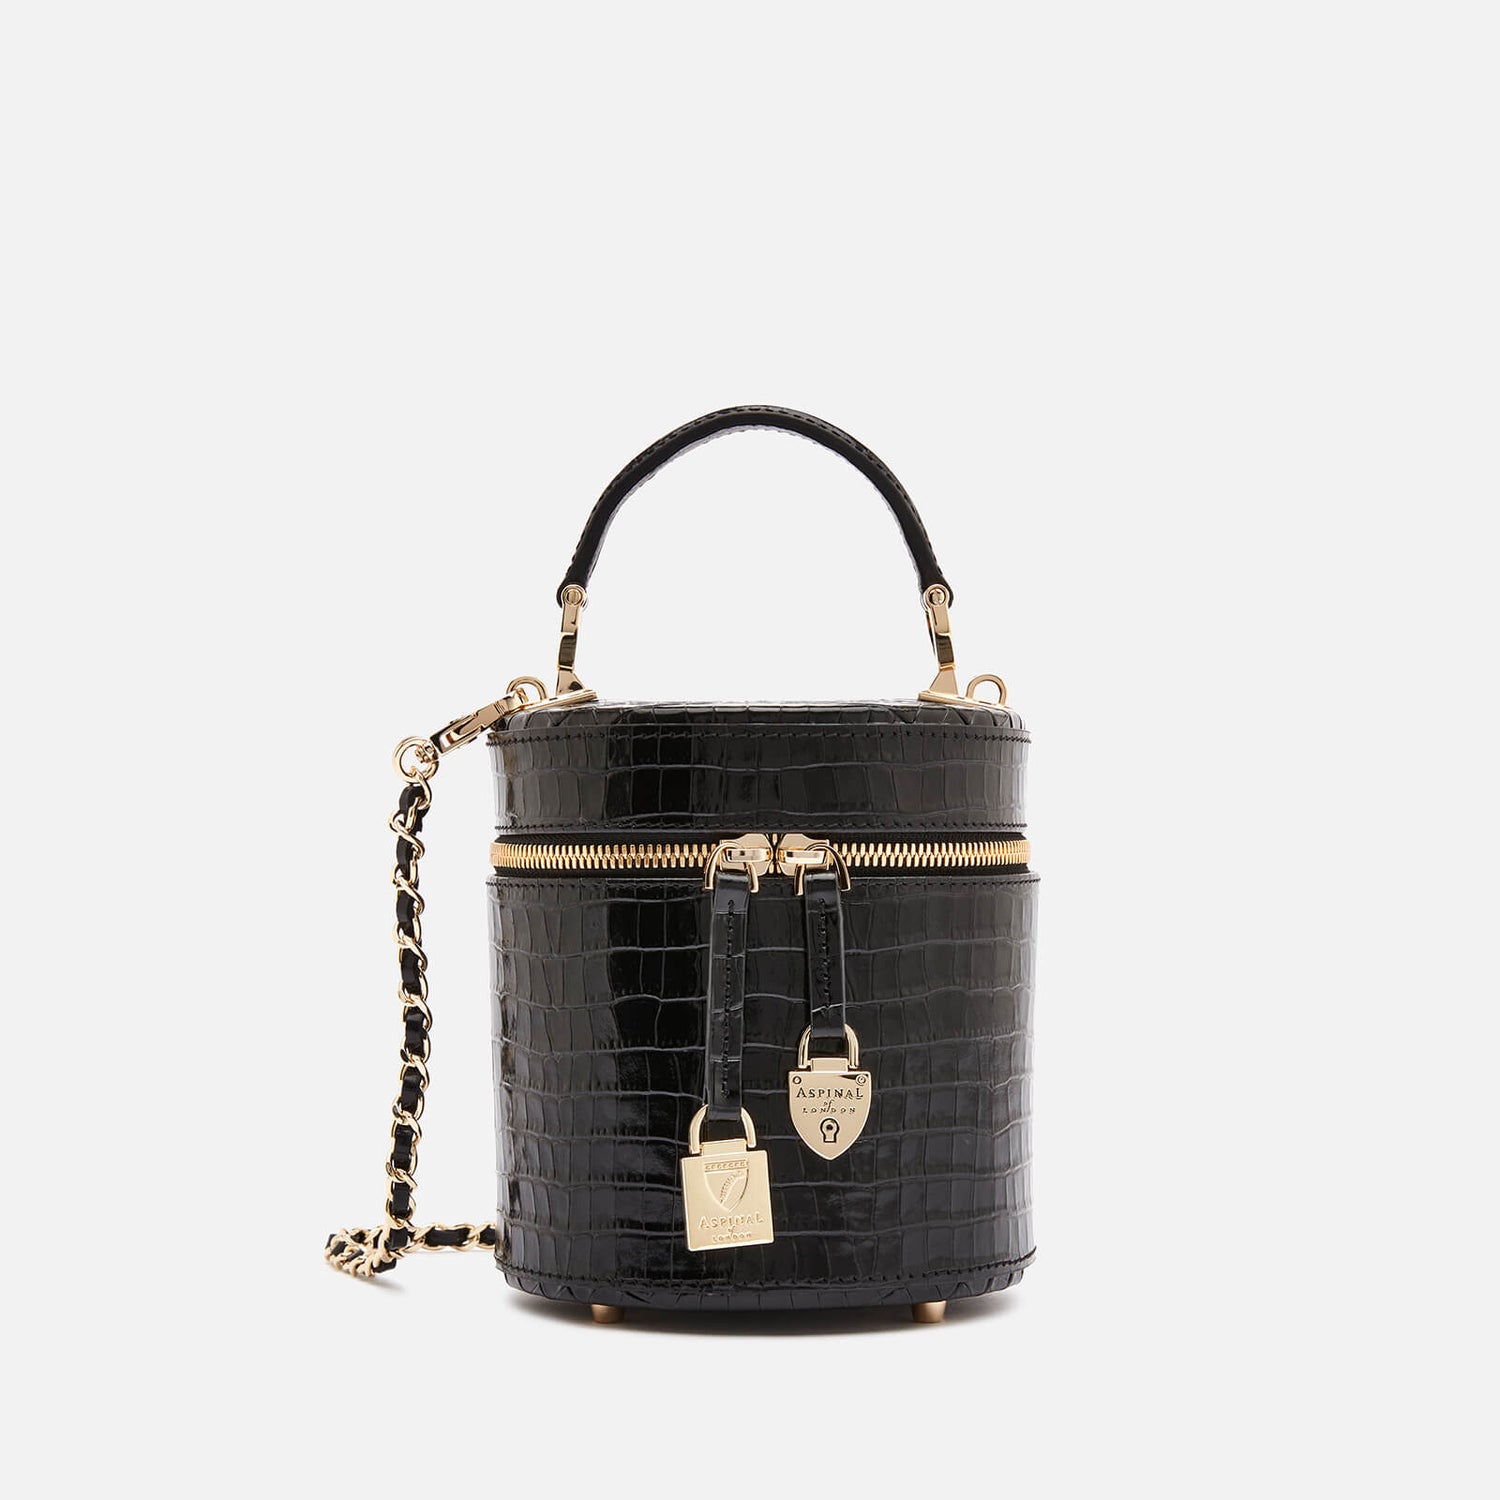 Aspinal of London Women's Pandora Bag - Black